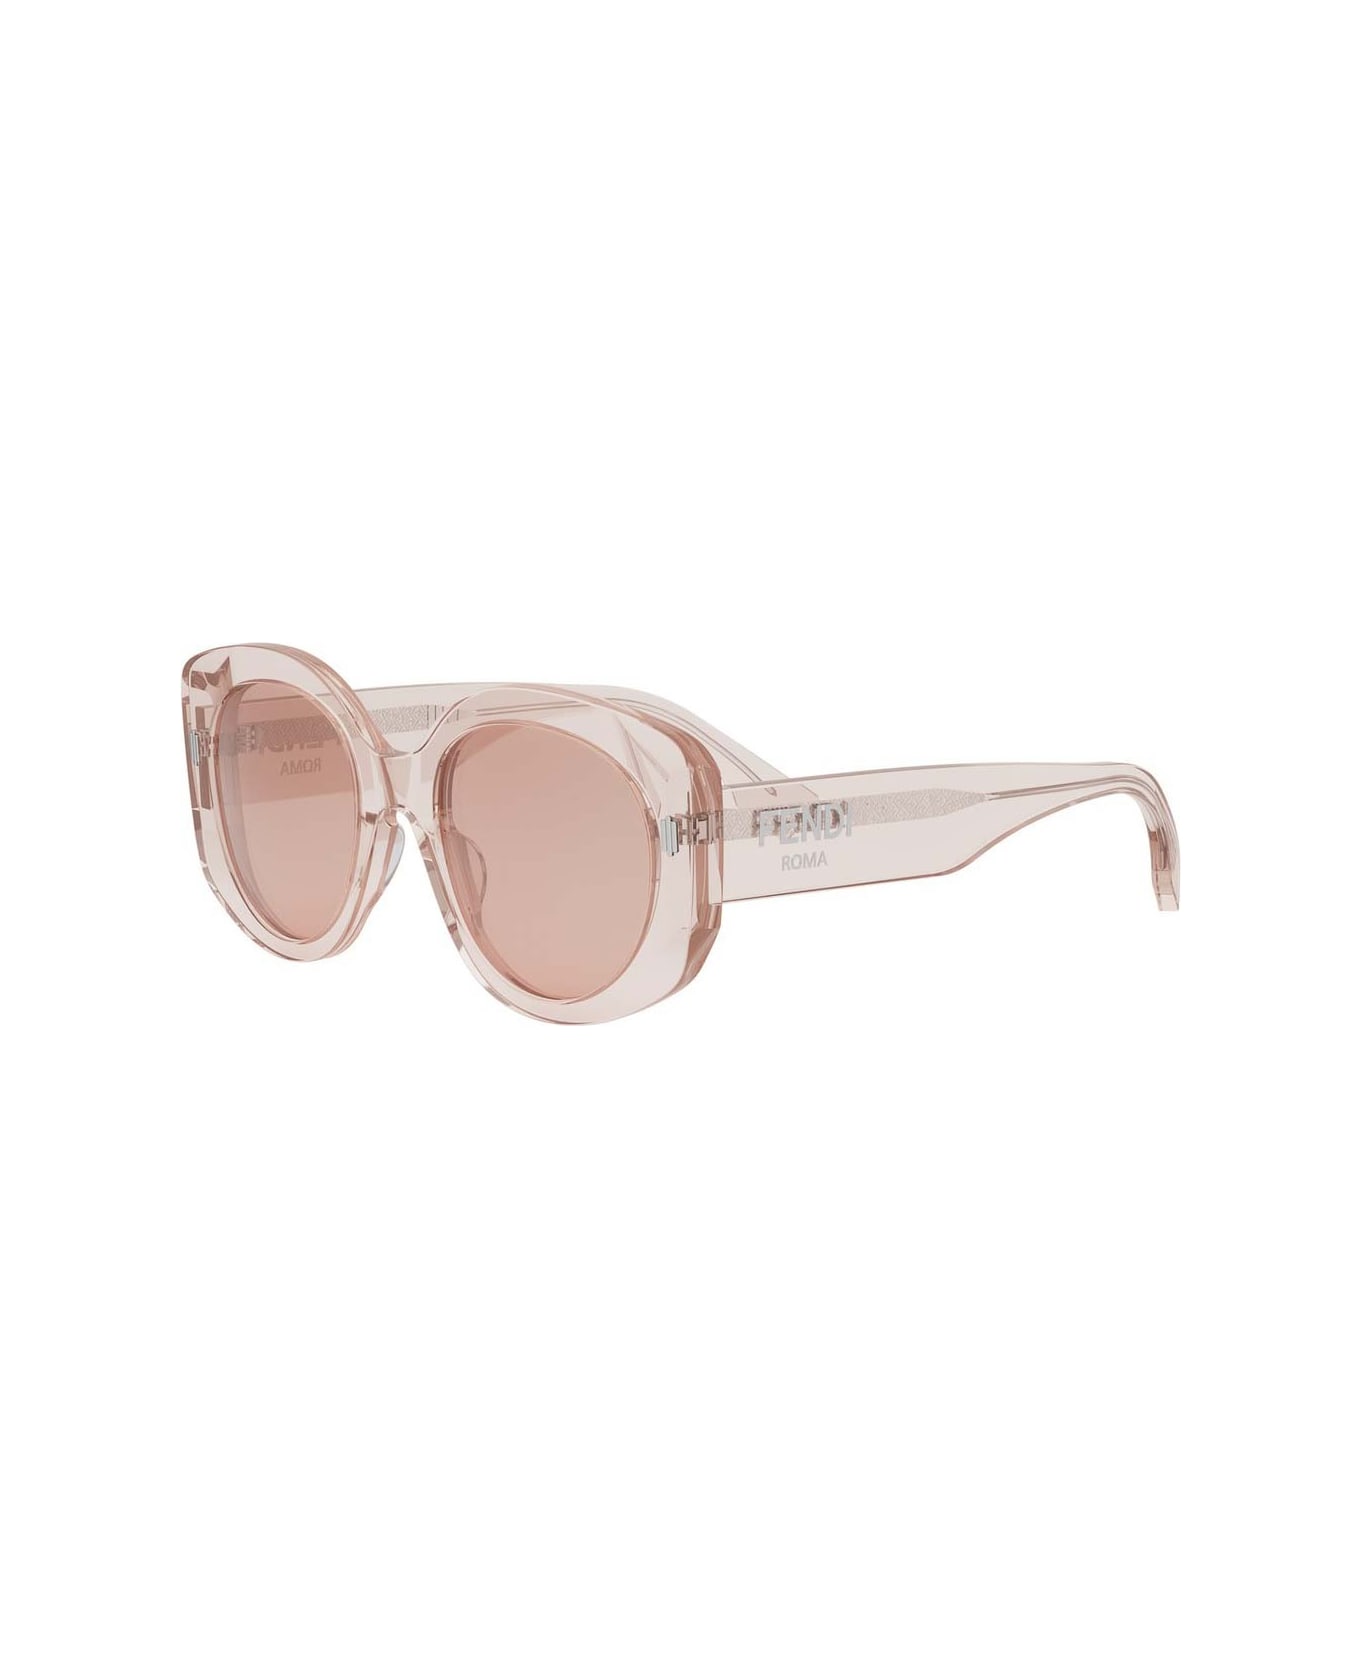 Fendi Eyewear Sunglasses - Rosa trasparente/Rosa サングラス